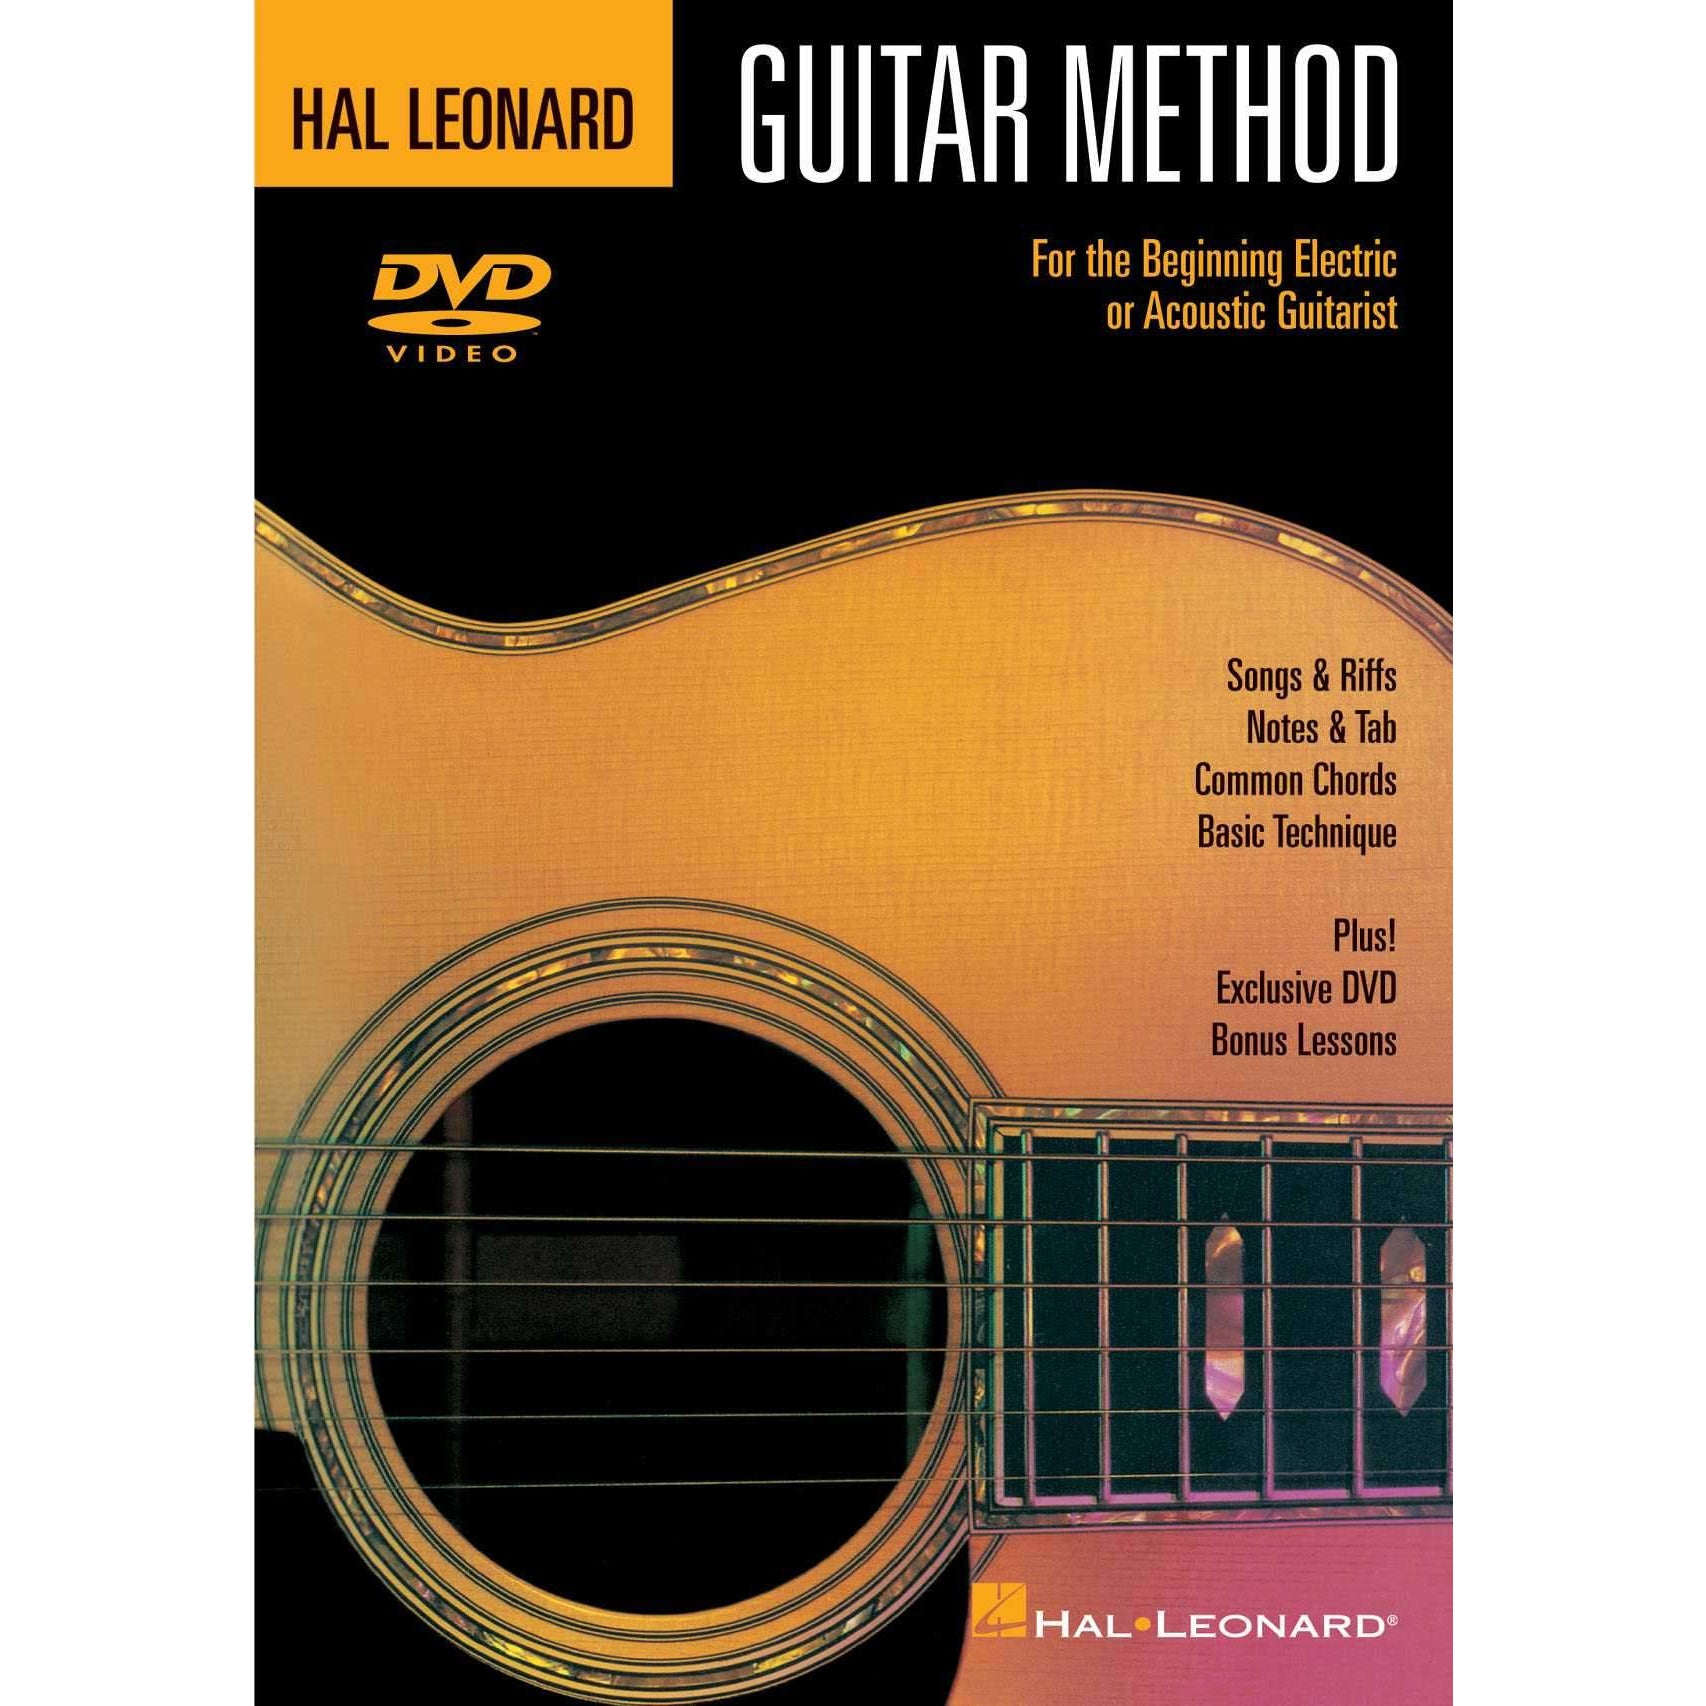 Image 1 of DVD - Hal Leonard Guitar Method DVD-For the Beginning Electric or Acoustic Guitarist - SKU# 49-DVD697318 : Product Type Media : Elderly Instruments